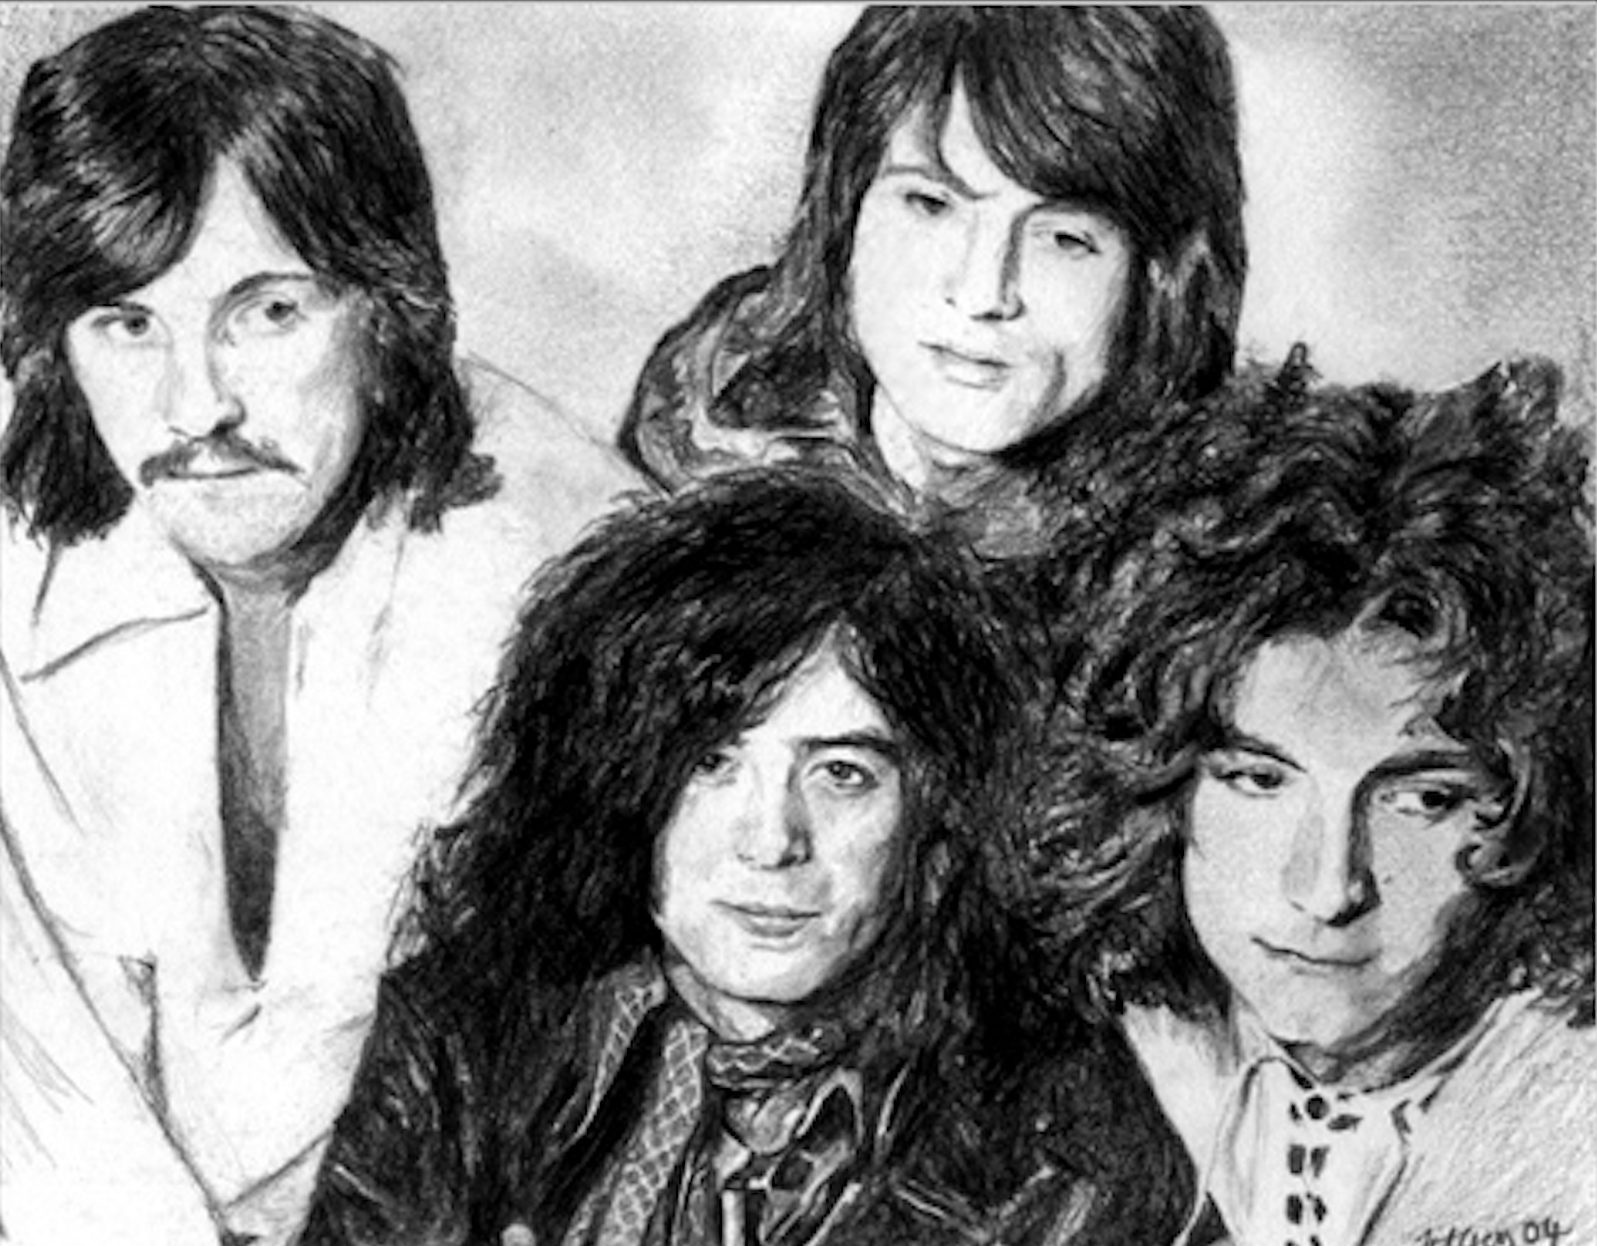 Led Zepplin Rock and Roll members in a pencil art style depicting Jimmy Page, Robert Plant, John Paul Jones, and  John Bonham